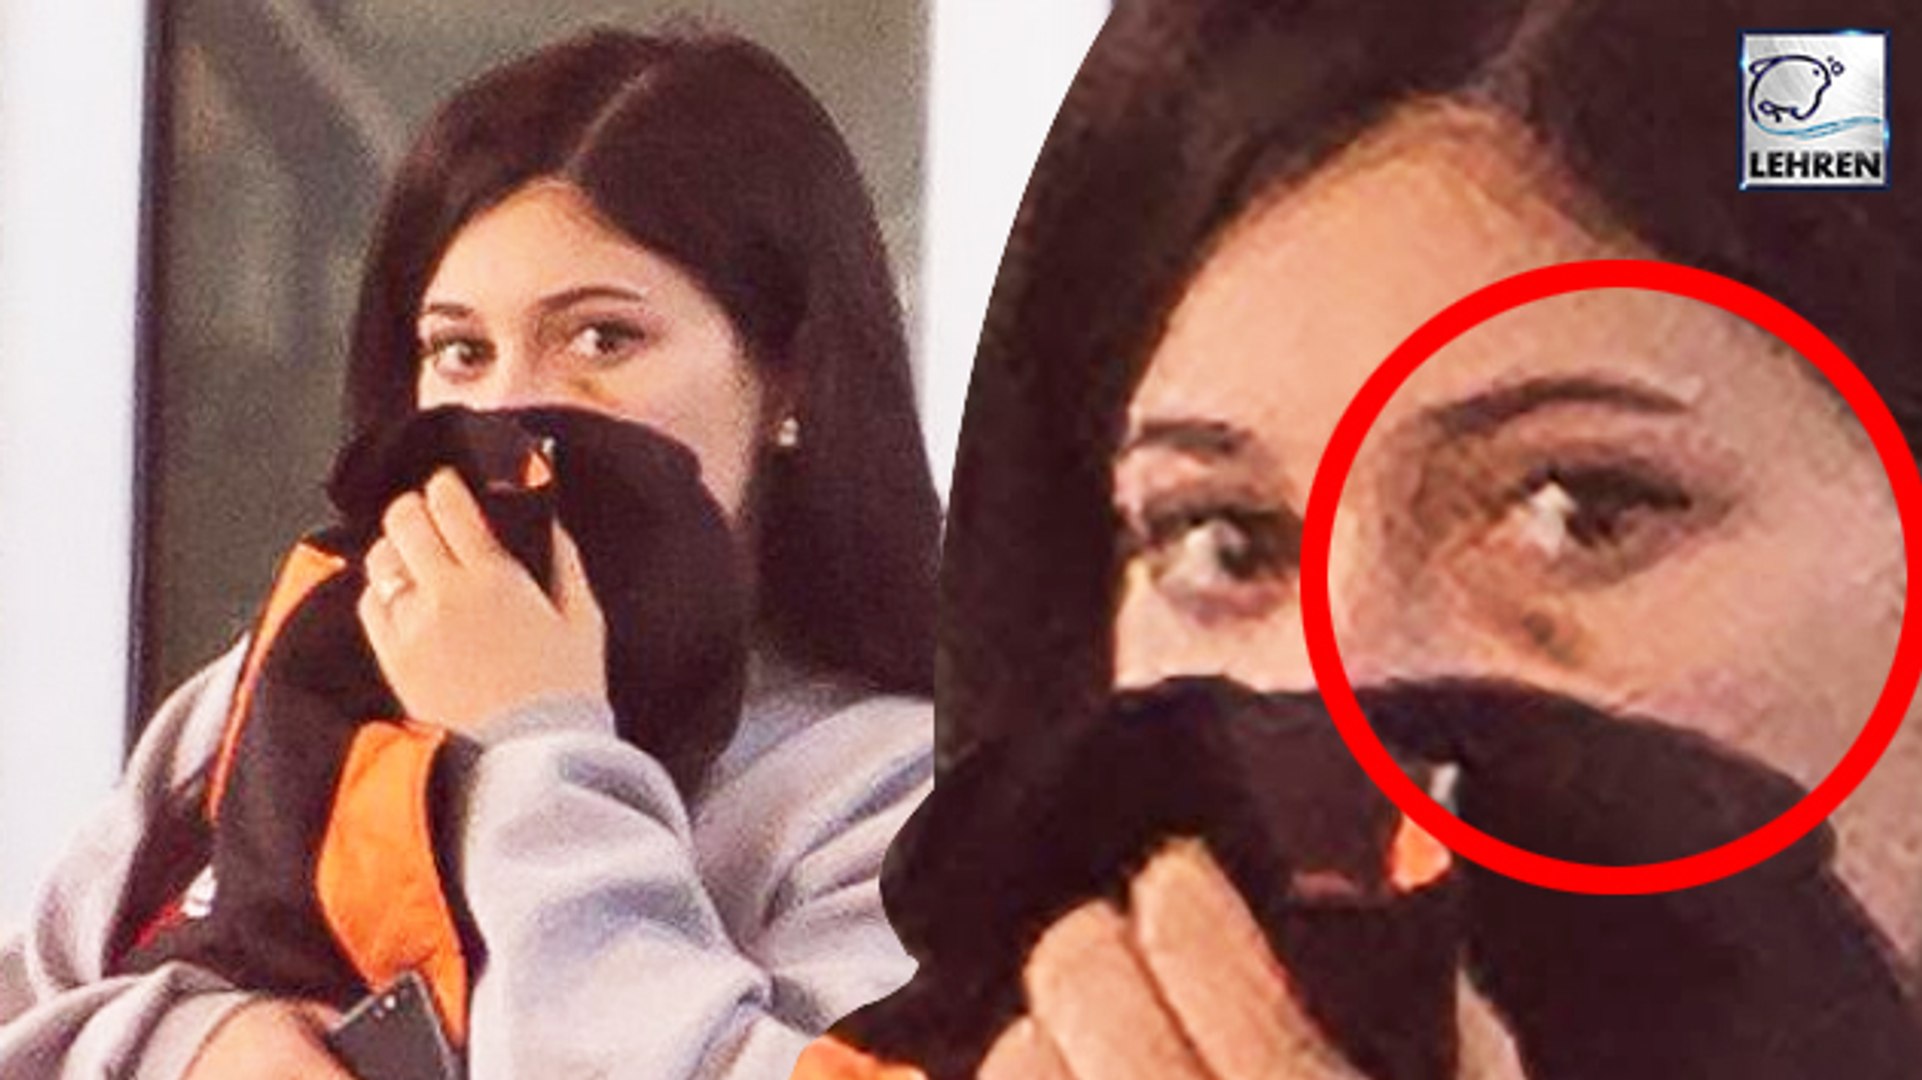 Kylie Jenner Seen With A Weird Mark Below Her Eye As She Hides Her Face